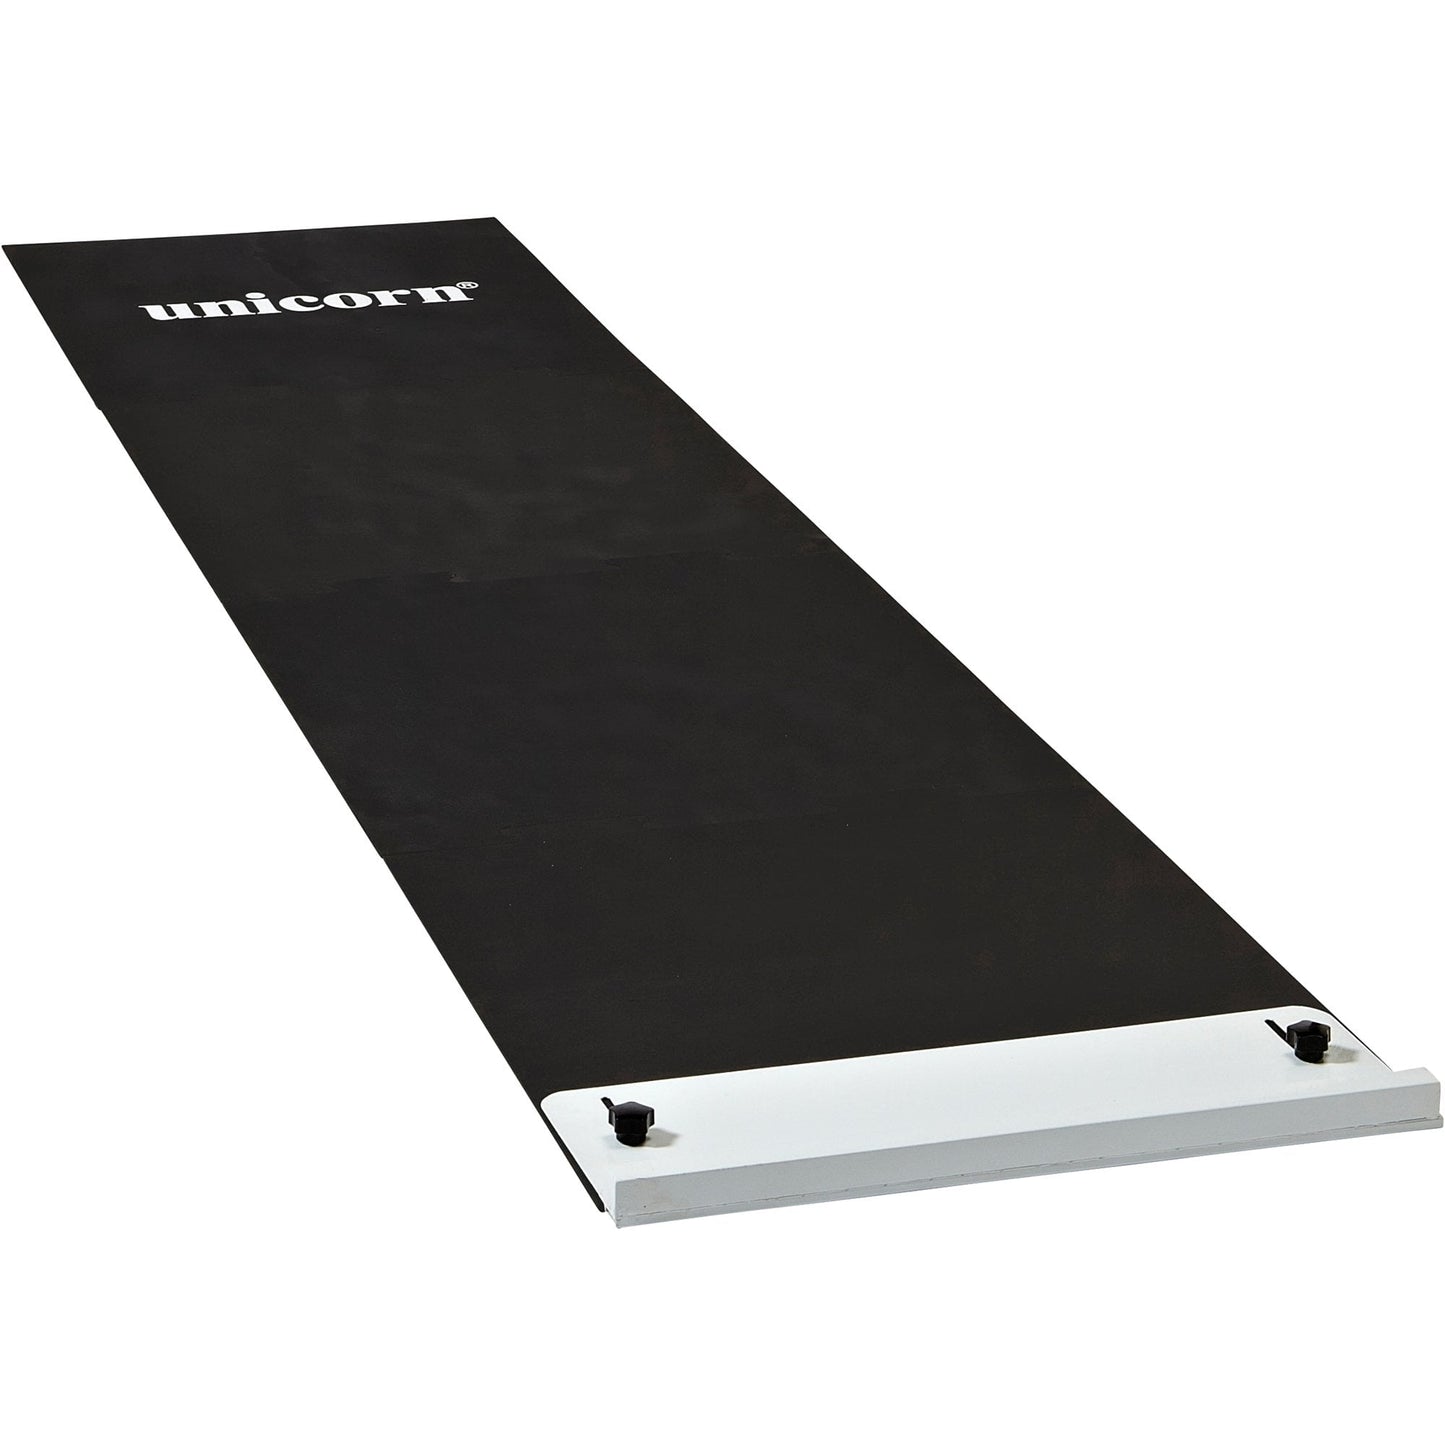 Unicorn Dart Mat - - Black Portable Raised And Oche - Lightweight